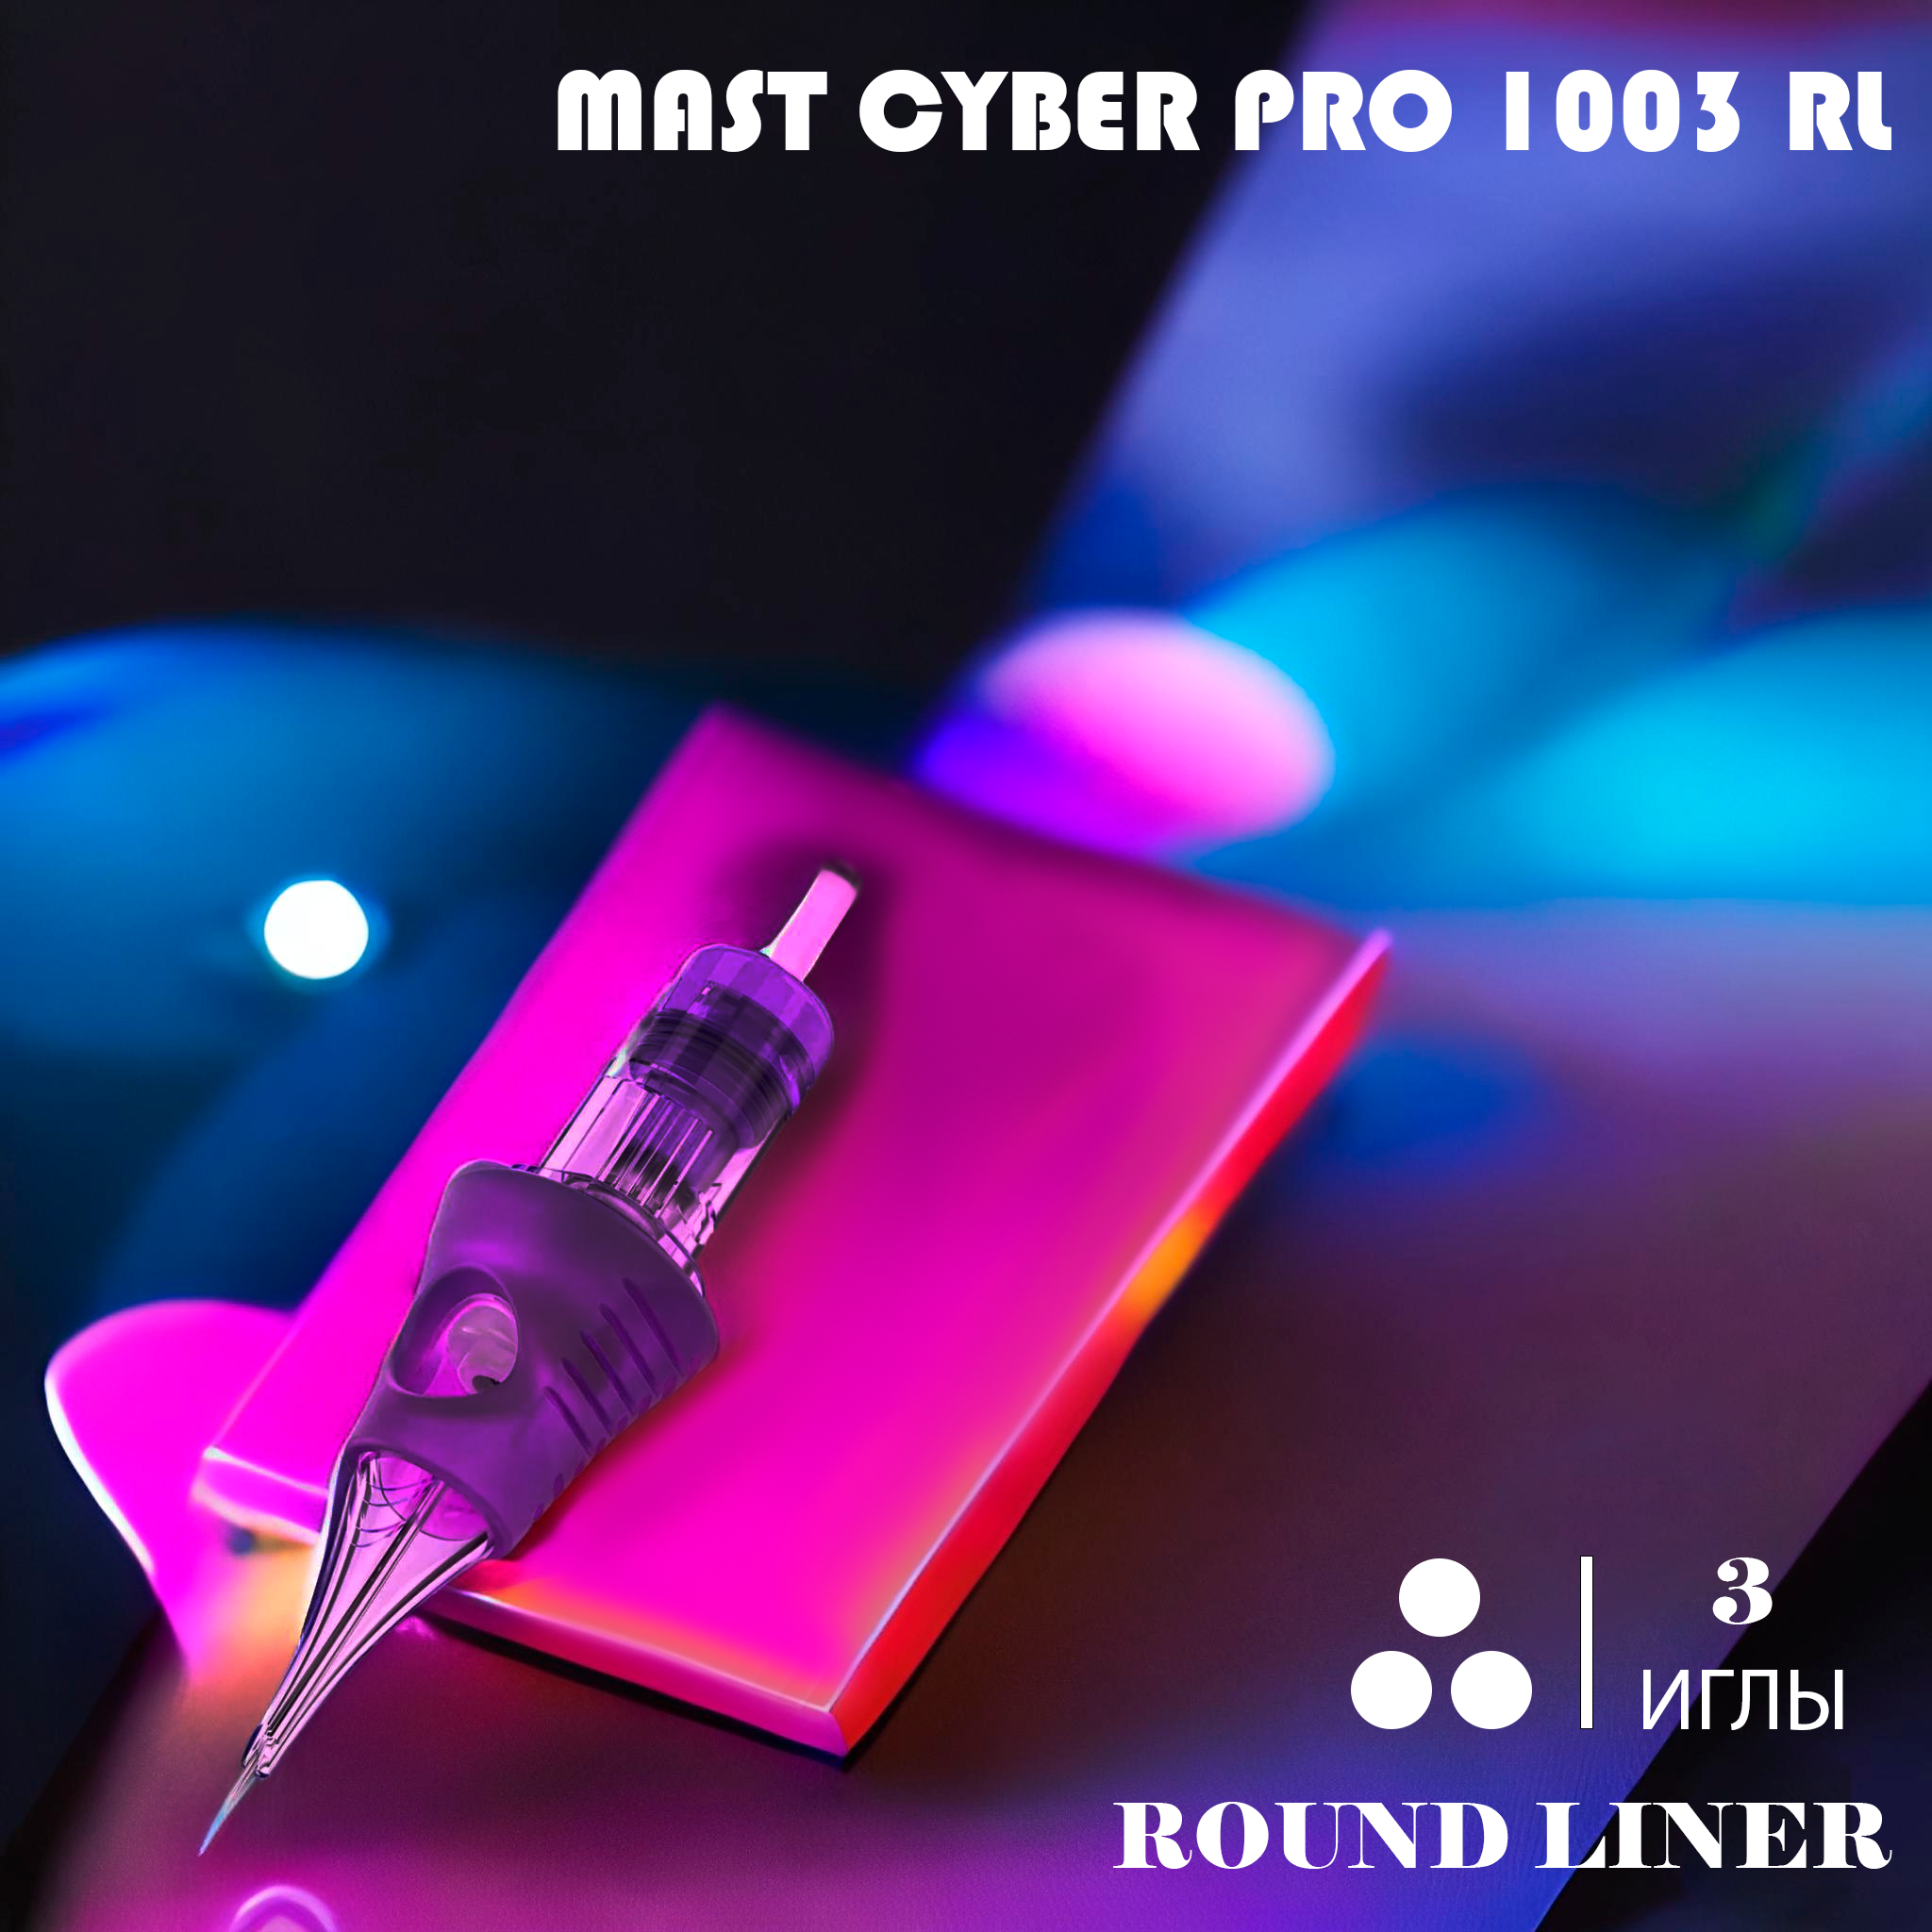 Картридж для тату Mast Cyber Professional Tattoo Cartridges 1003 RL (20 шт)